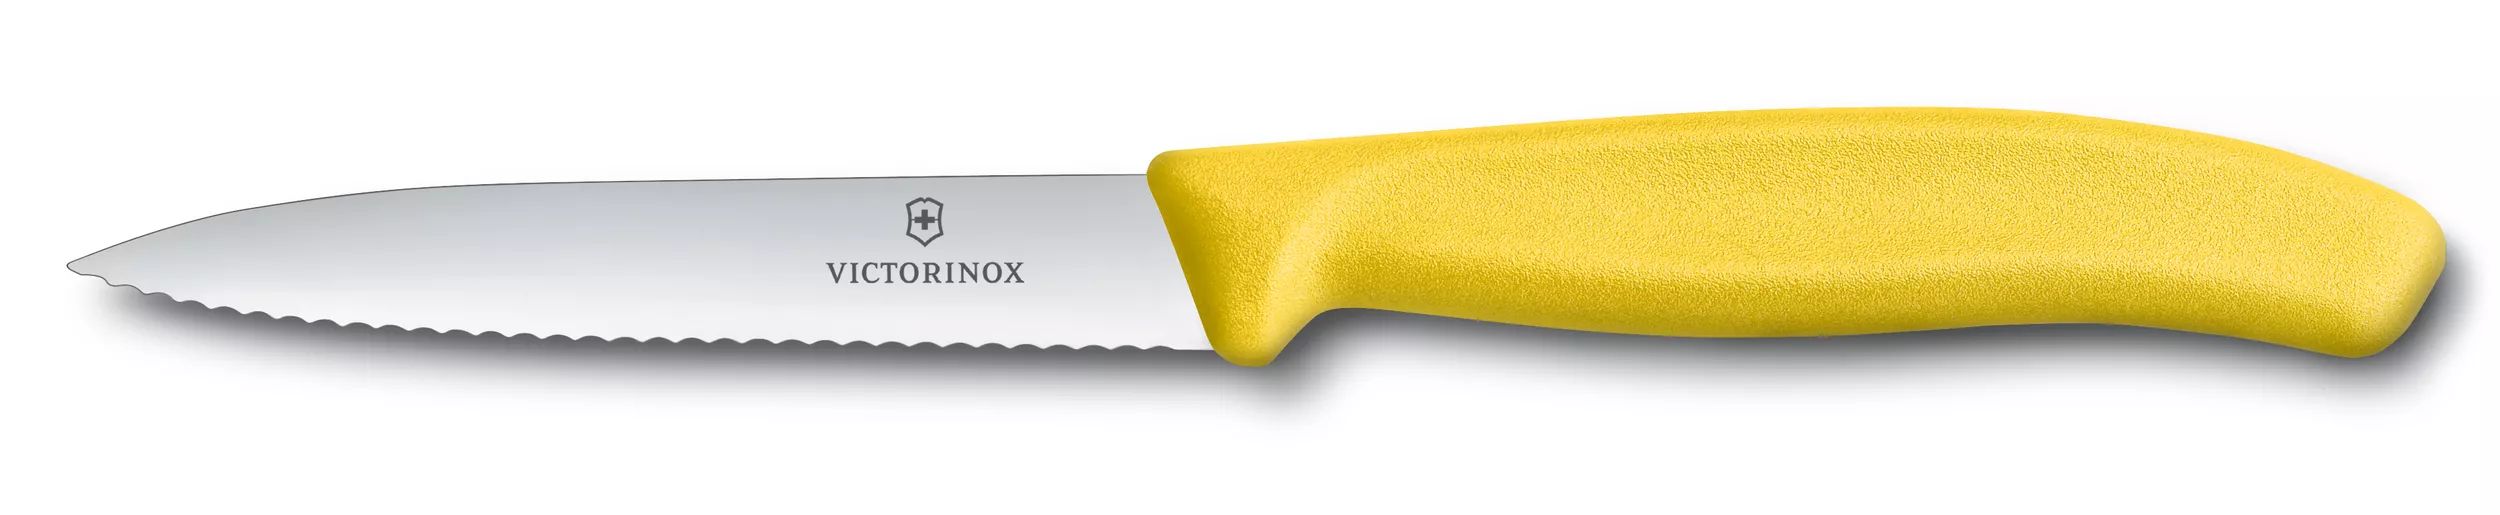 Swiss Classic Paring Knife-6.7736.L8